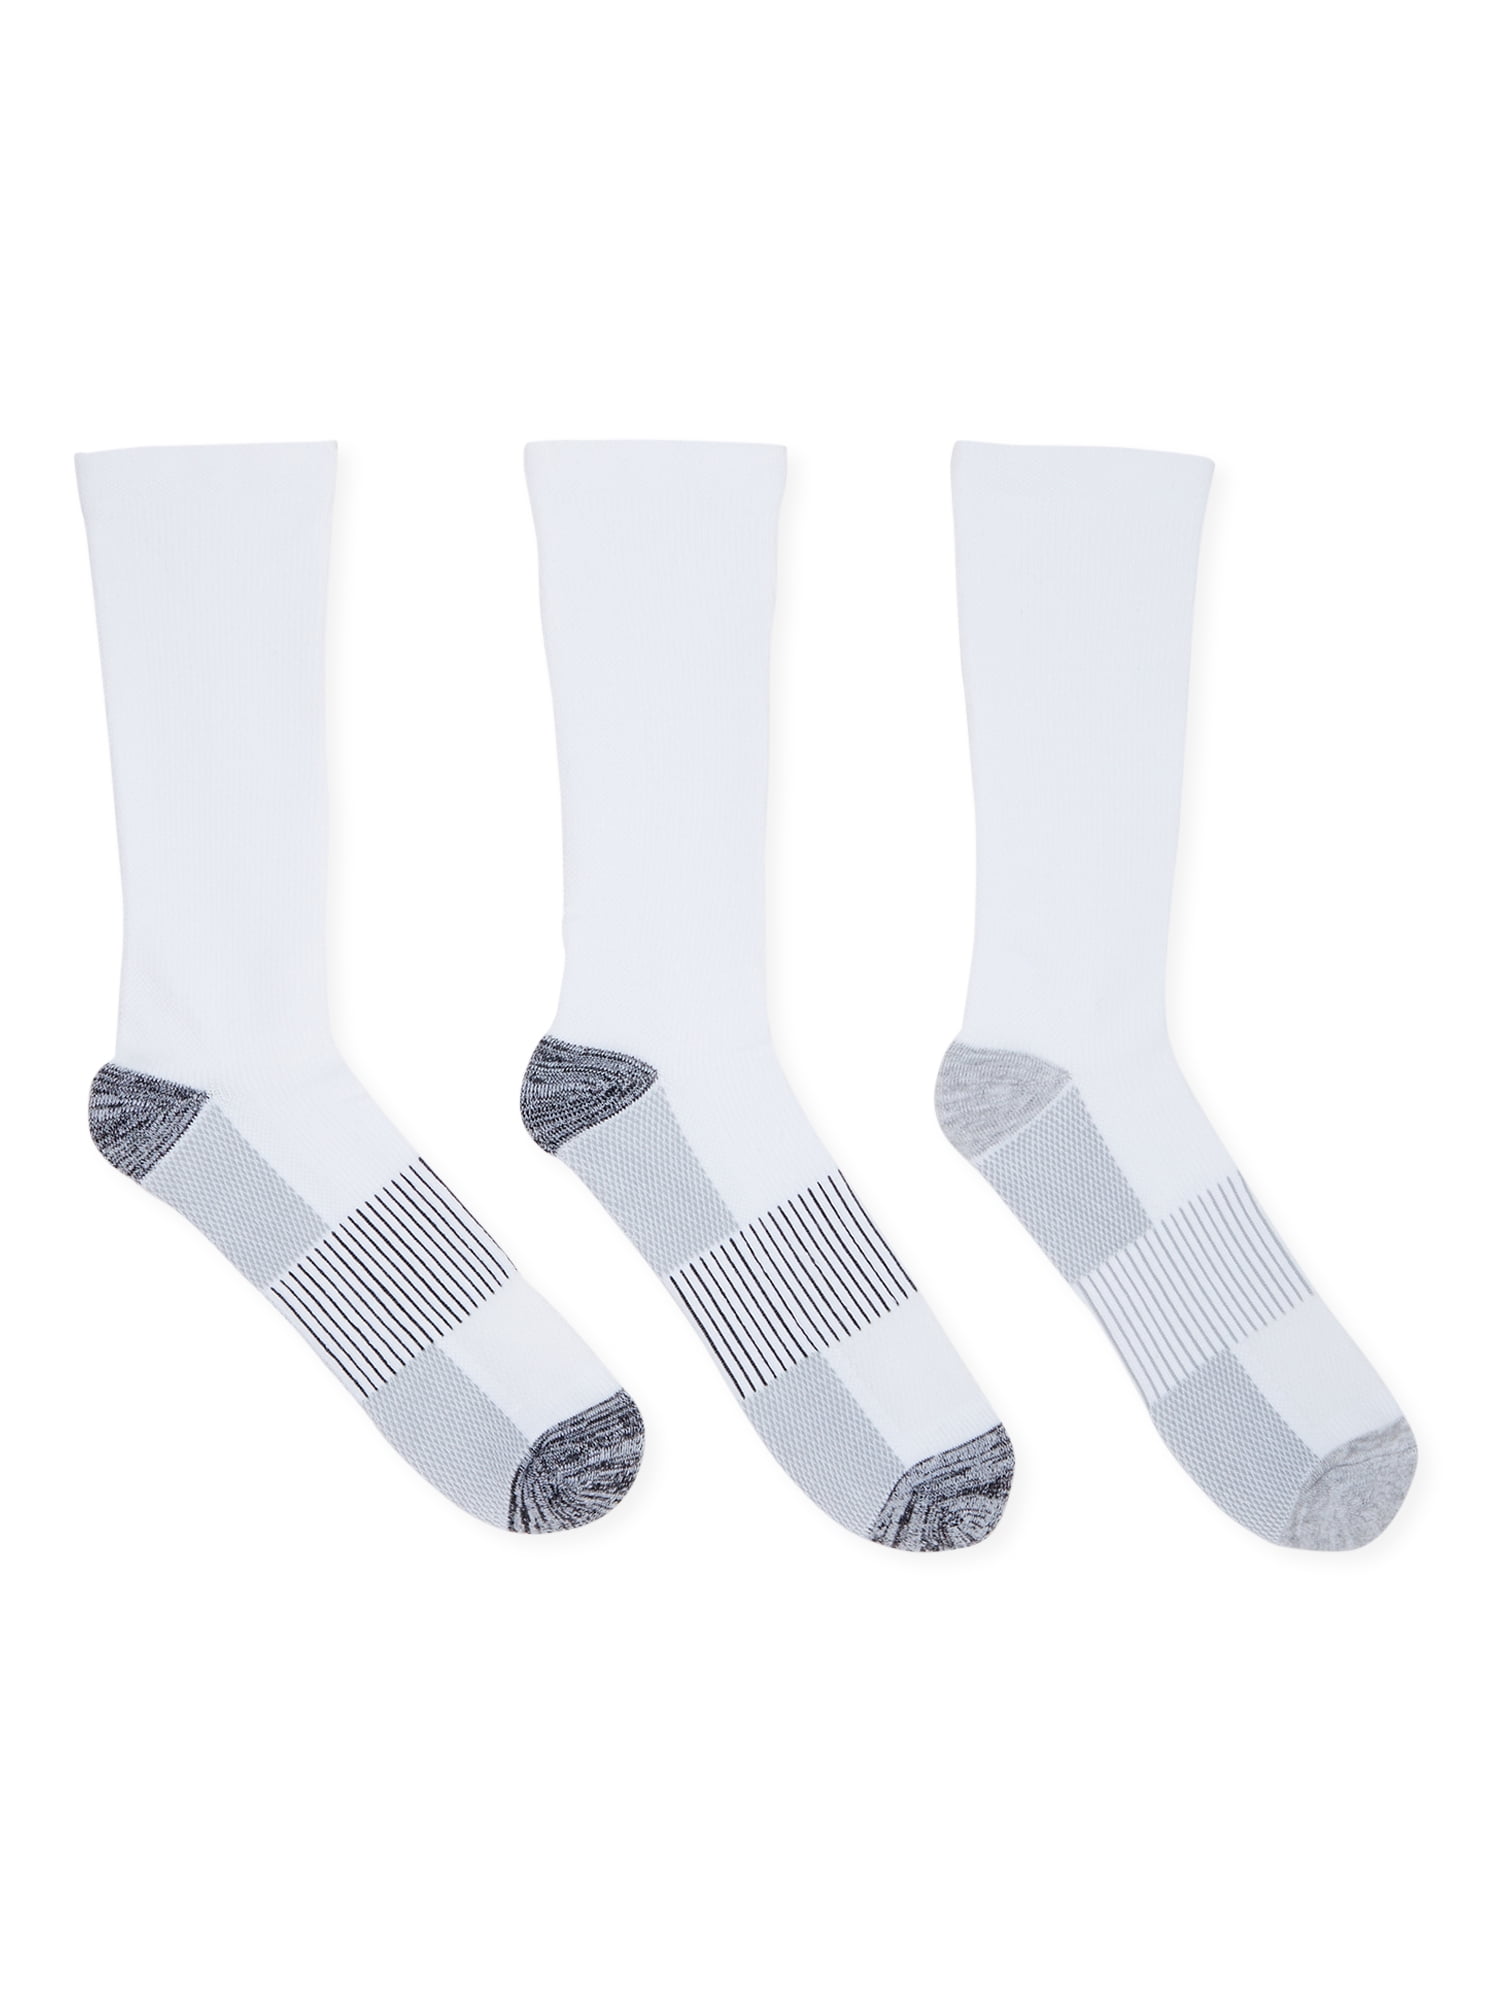 Mens unicorn stars compression sweat-absorbent cool socks soccer happy crew socks 